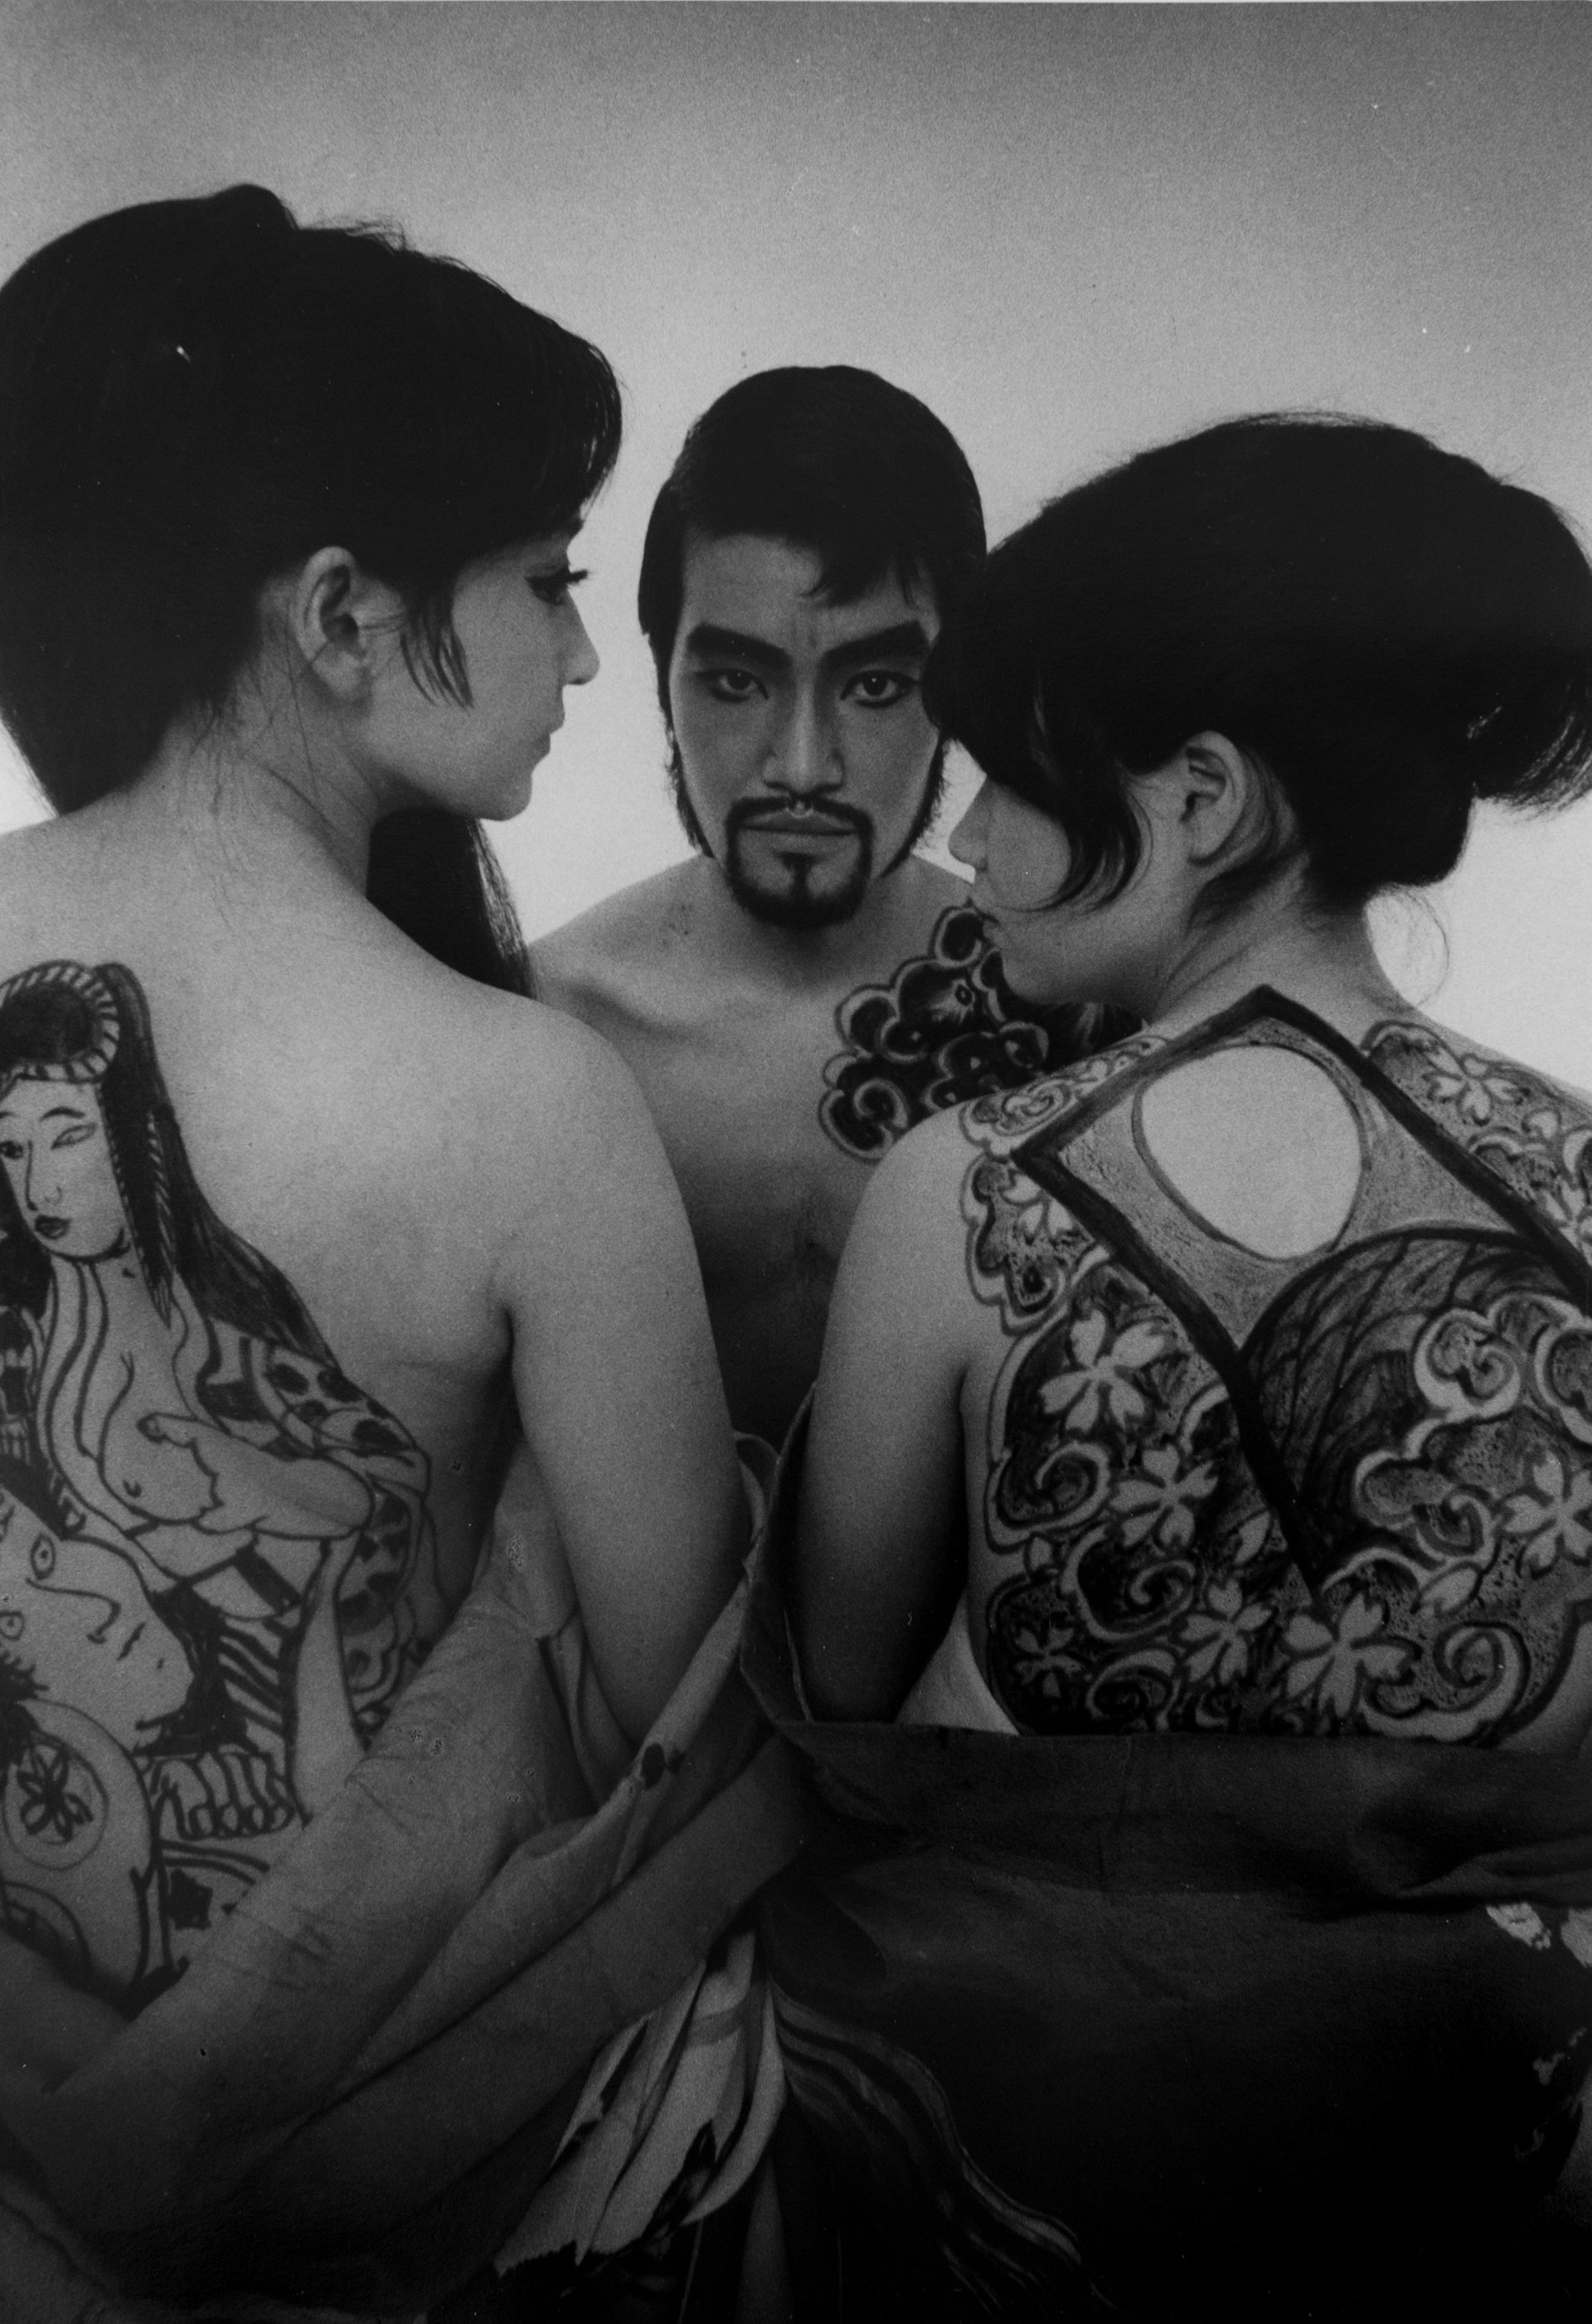 Tenjo Sajiki theater group, 1968 (drawings on womens backs and man)